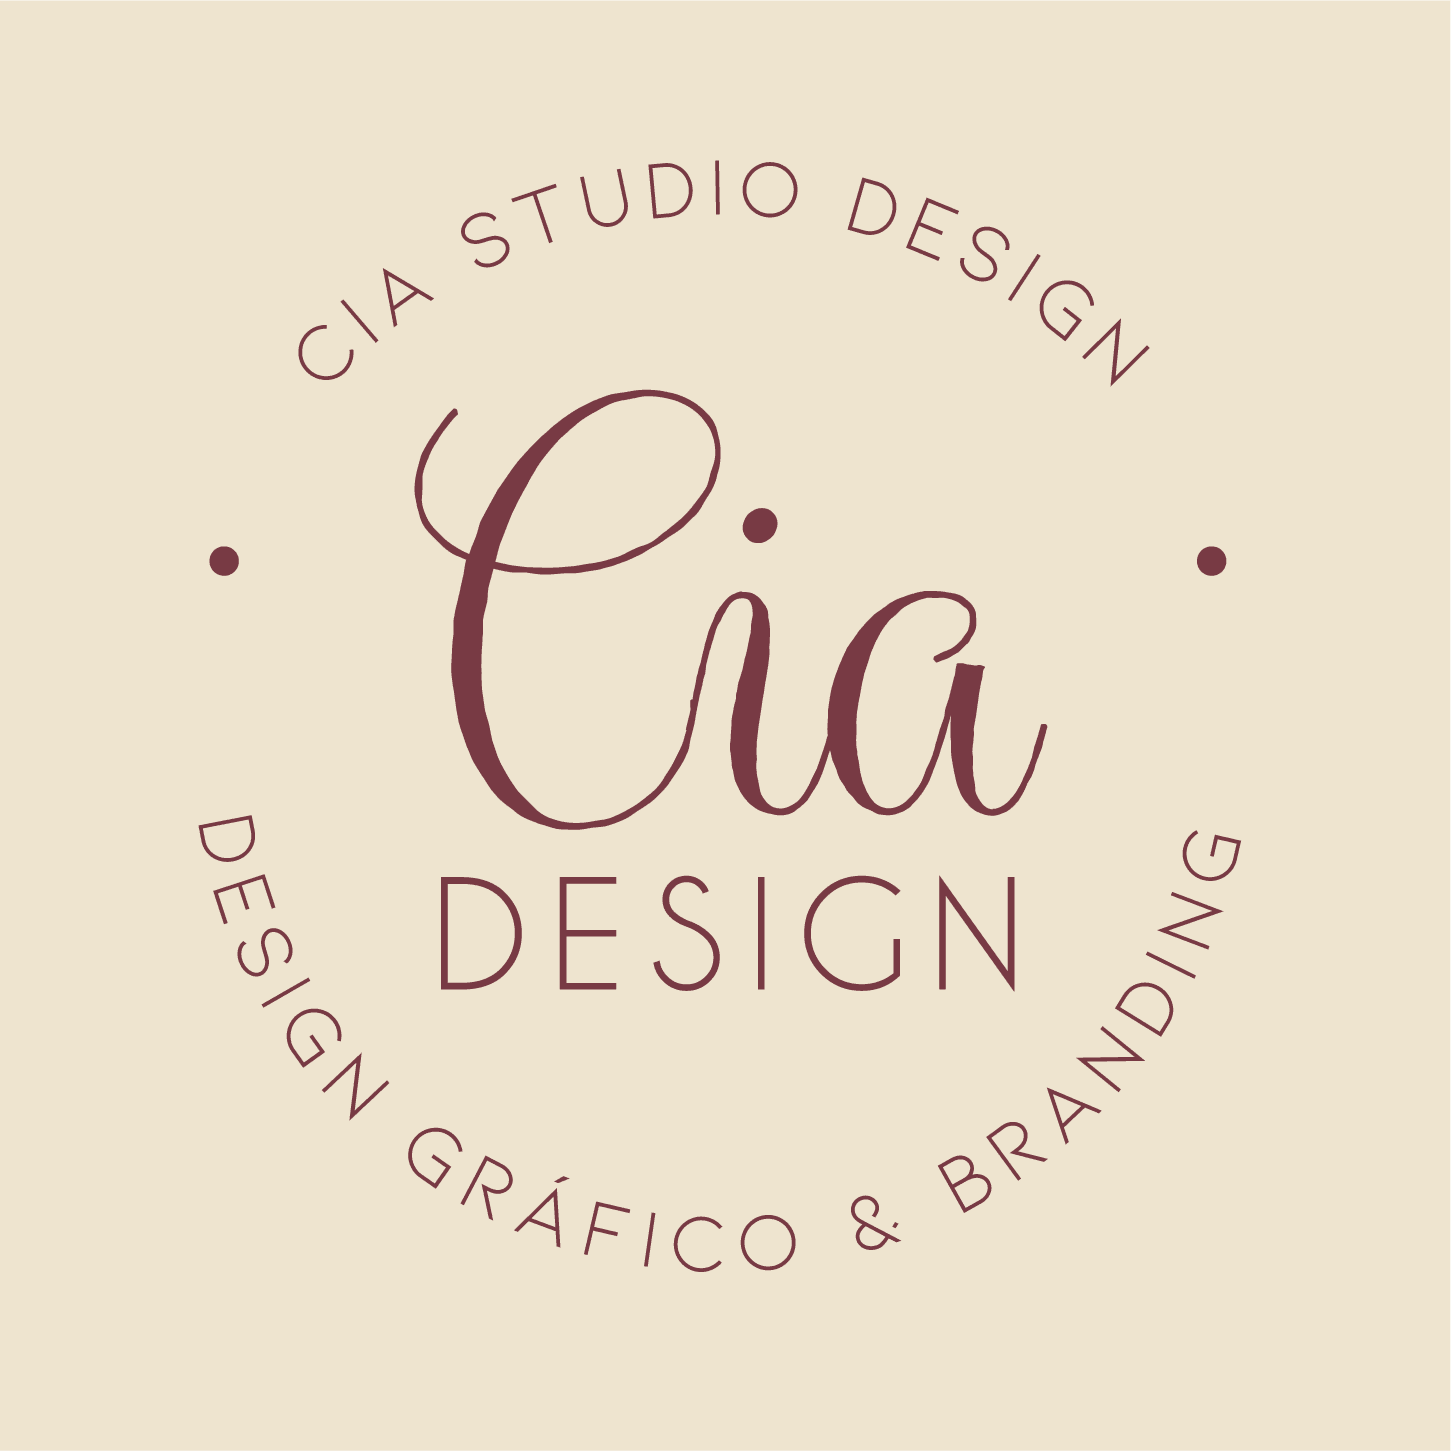 Cia Studio Design